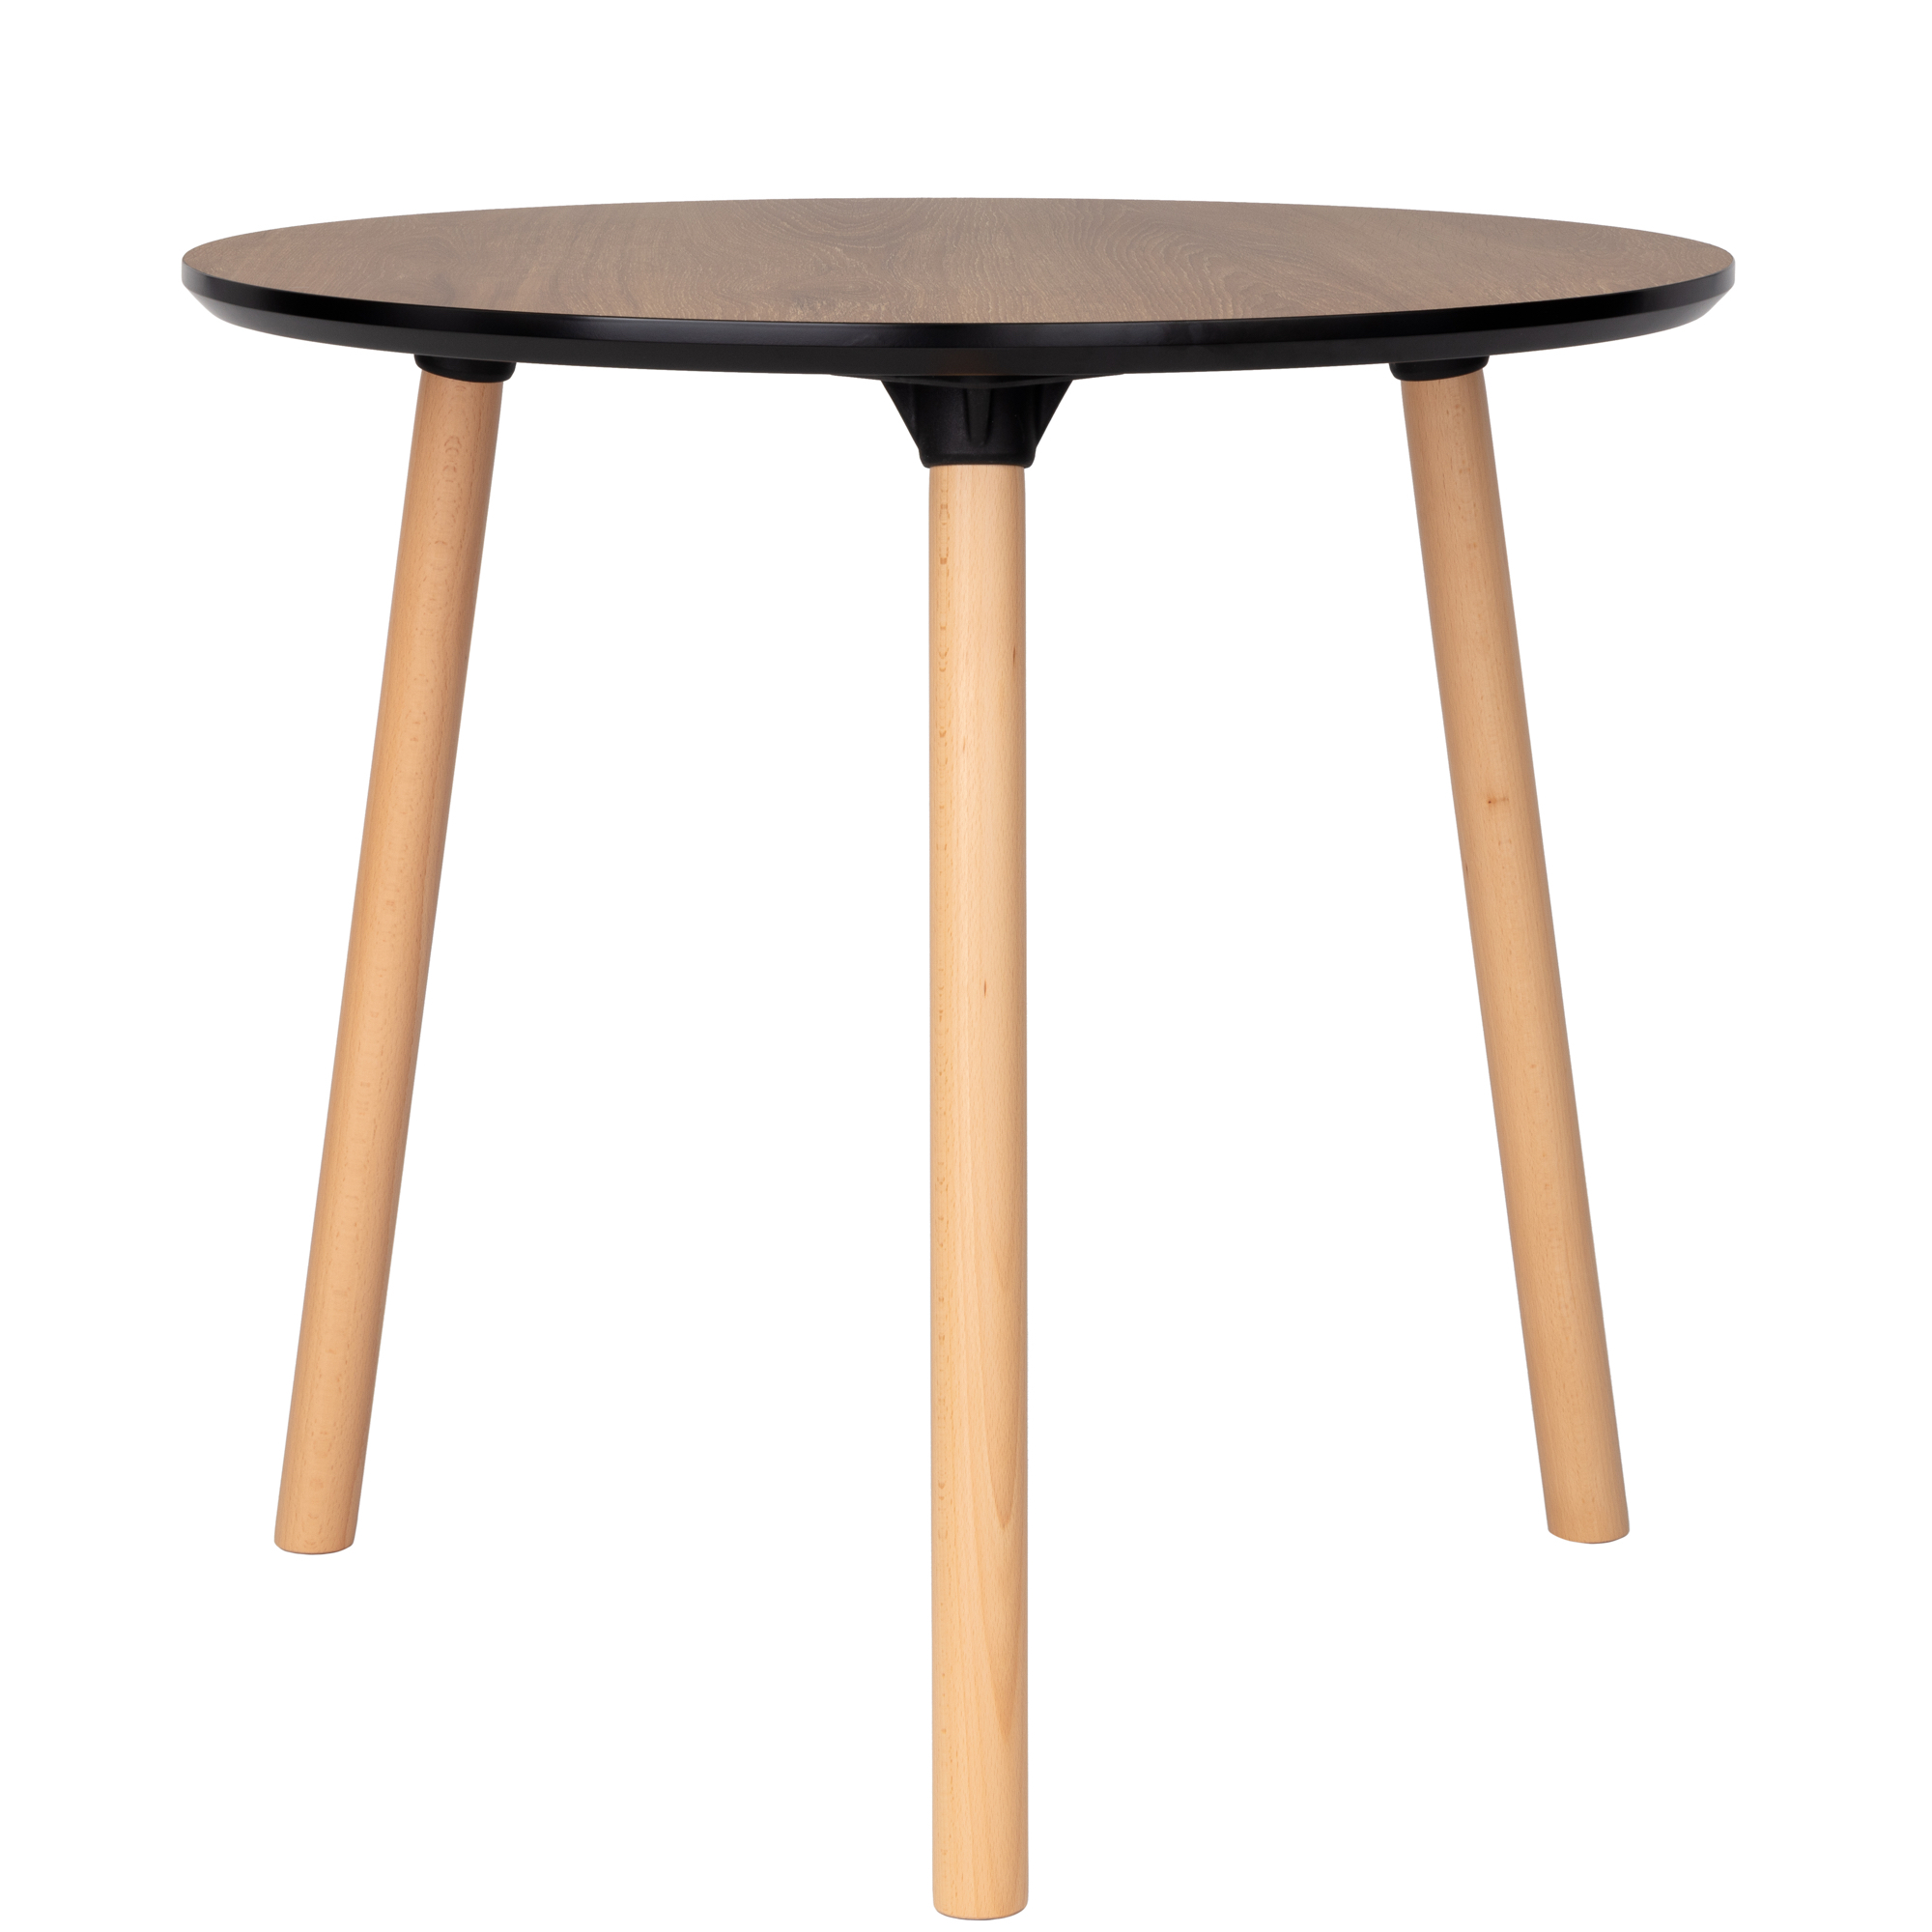 Обеденный стол Morton 80 см меламин коричневый StoreForHome / PW-037-1-WOOD